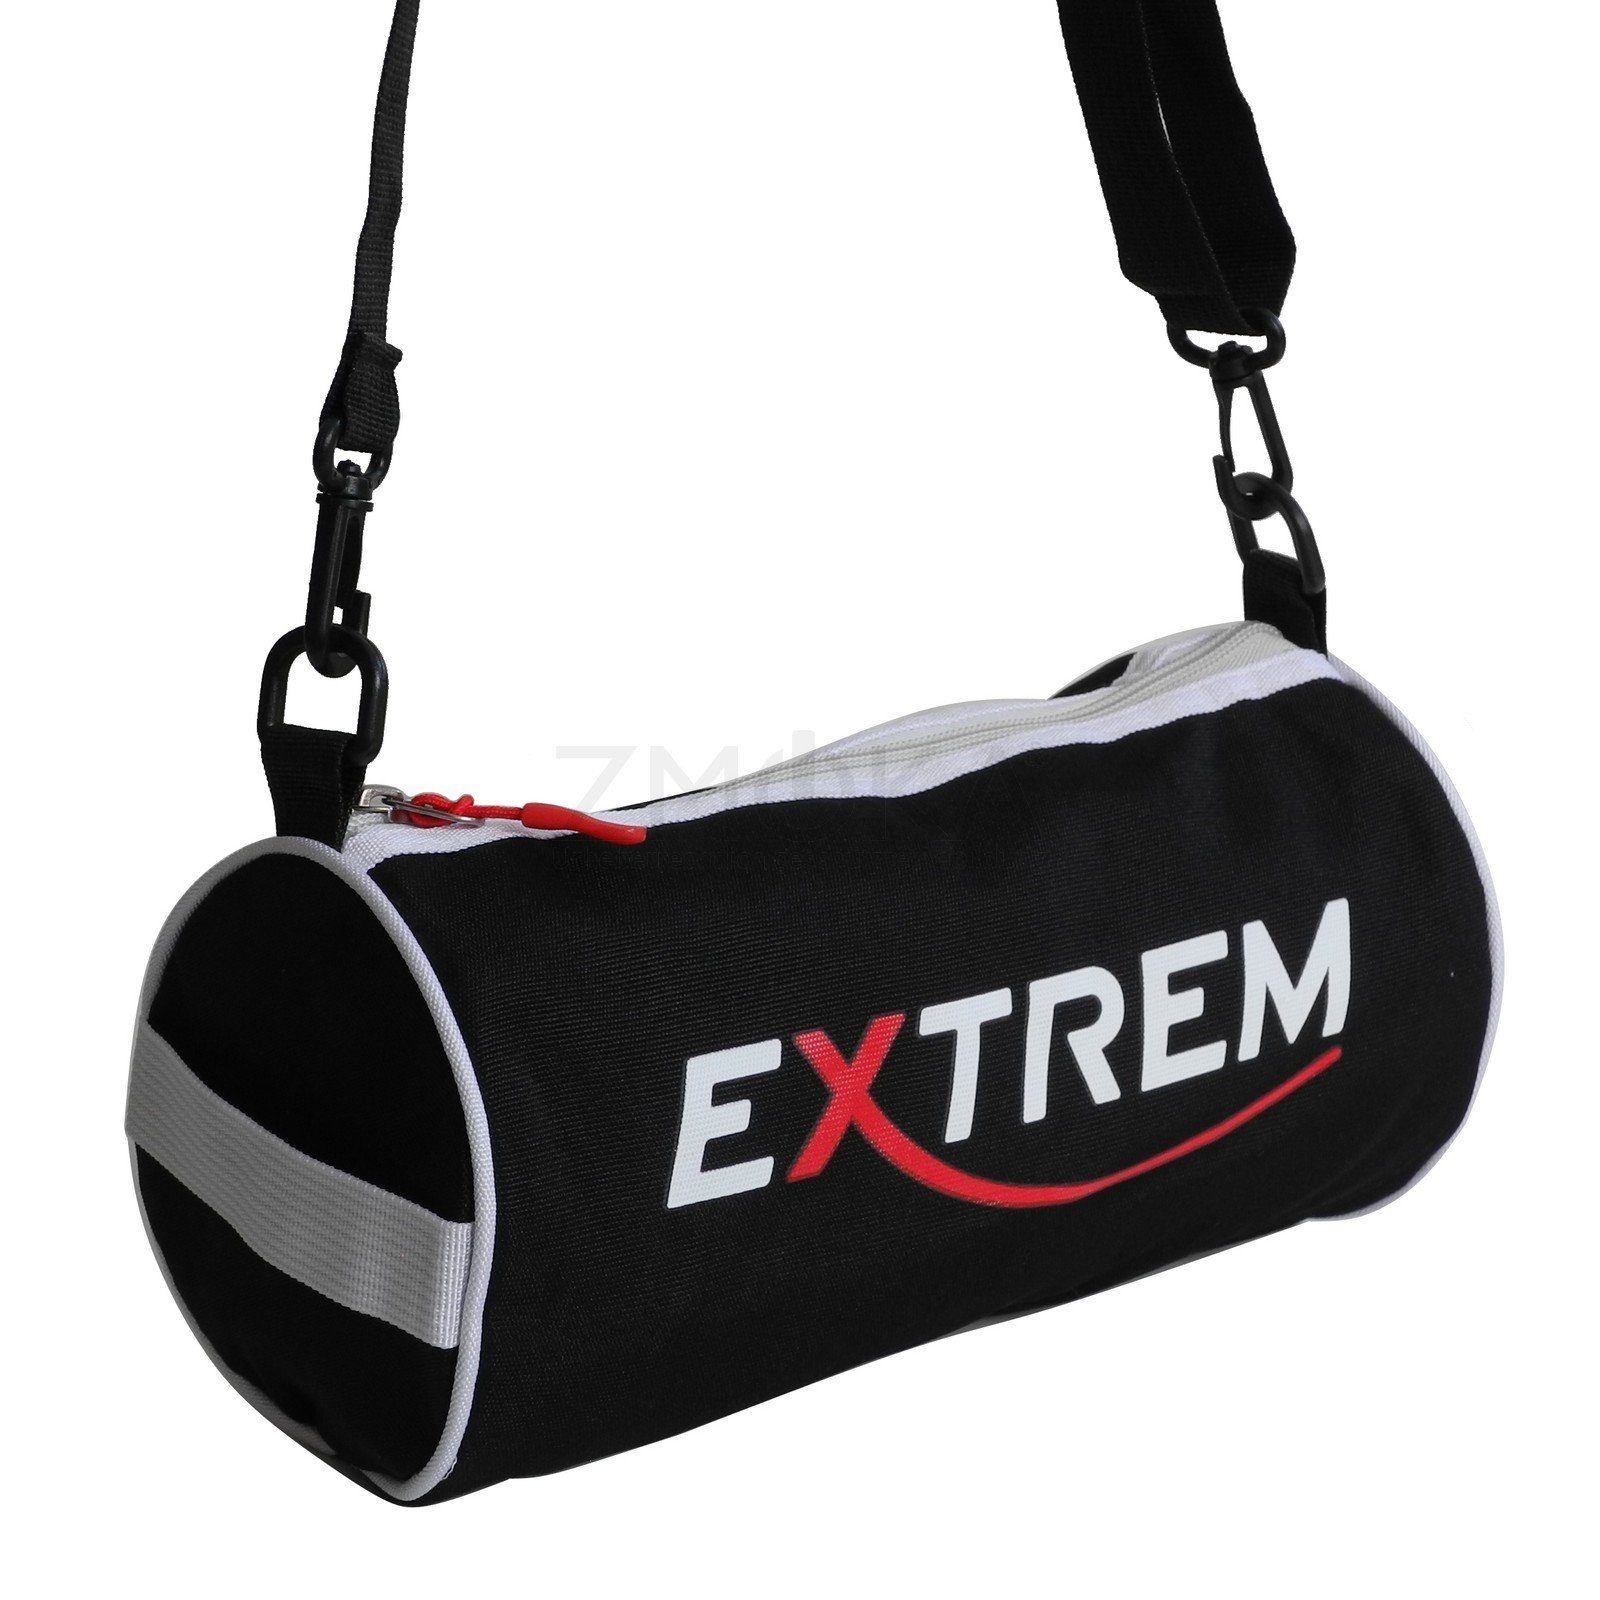 Uni Bag Auswahl - Schwarz Street Crossbody BAG Umhängetasche STREET Extreme Bag Umhängetasche